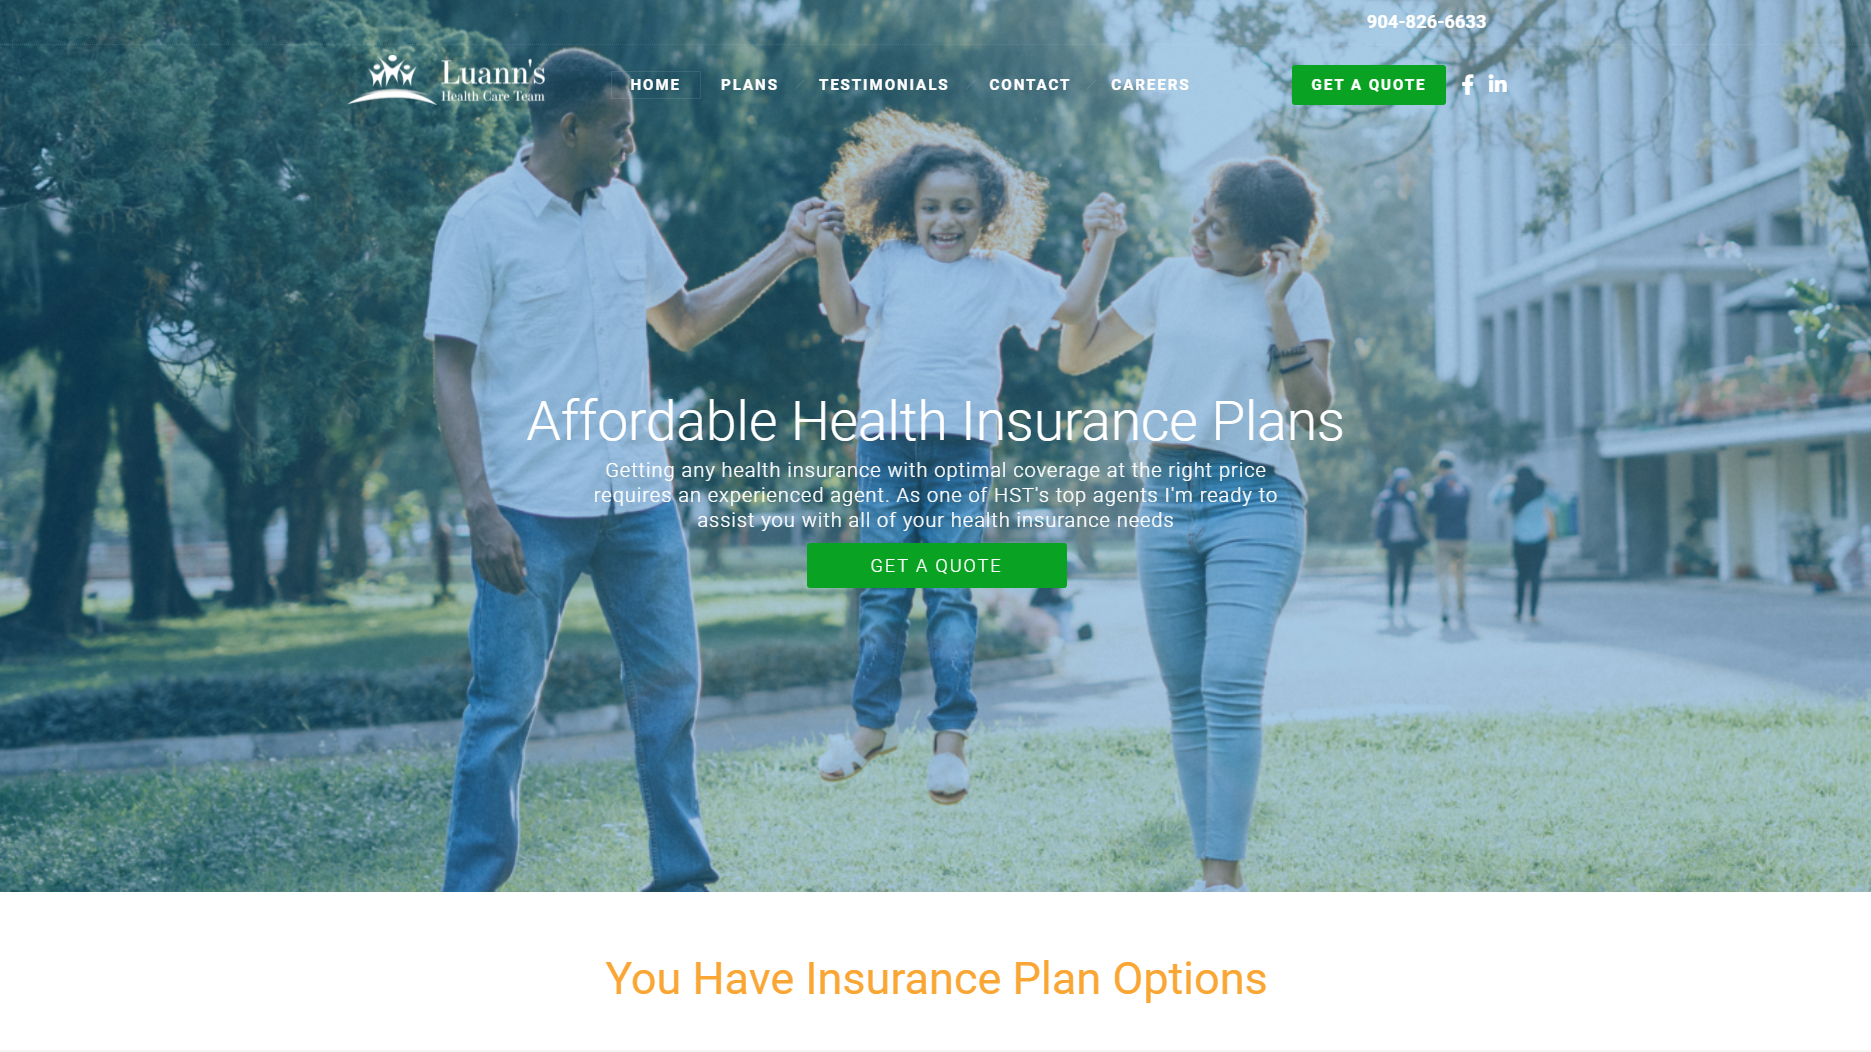 Pain Free Health Insurance